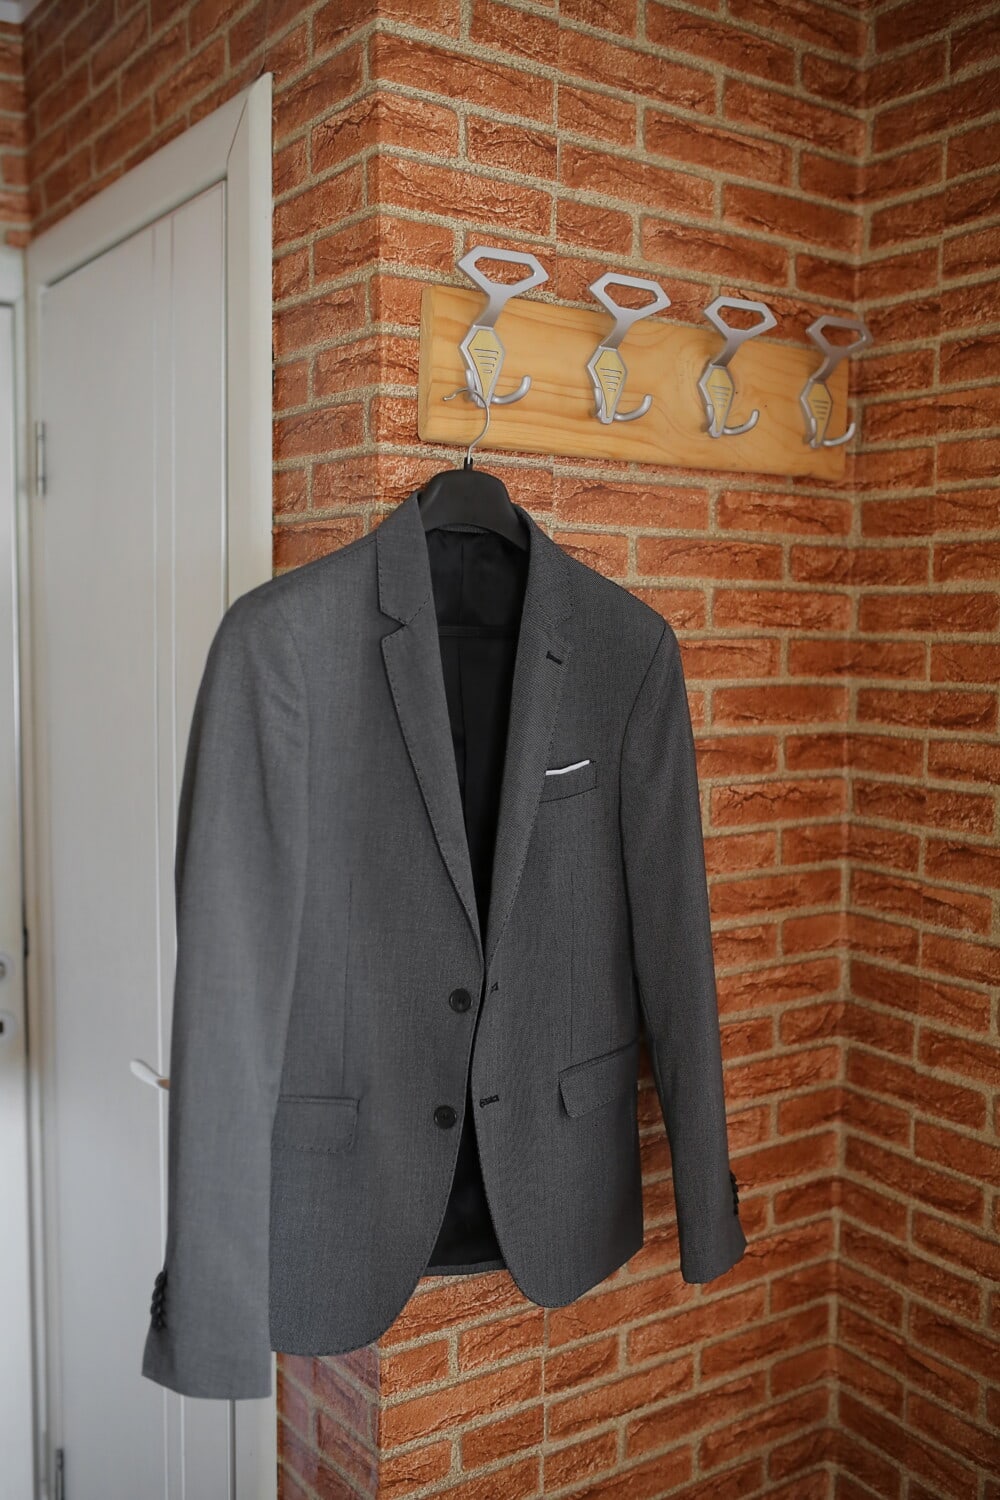 suit, hanging, jacket, covering, garment, clothing, fashion, retro, urban, brick